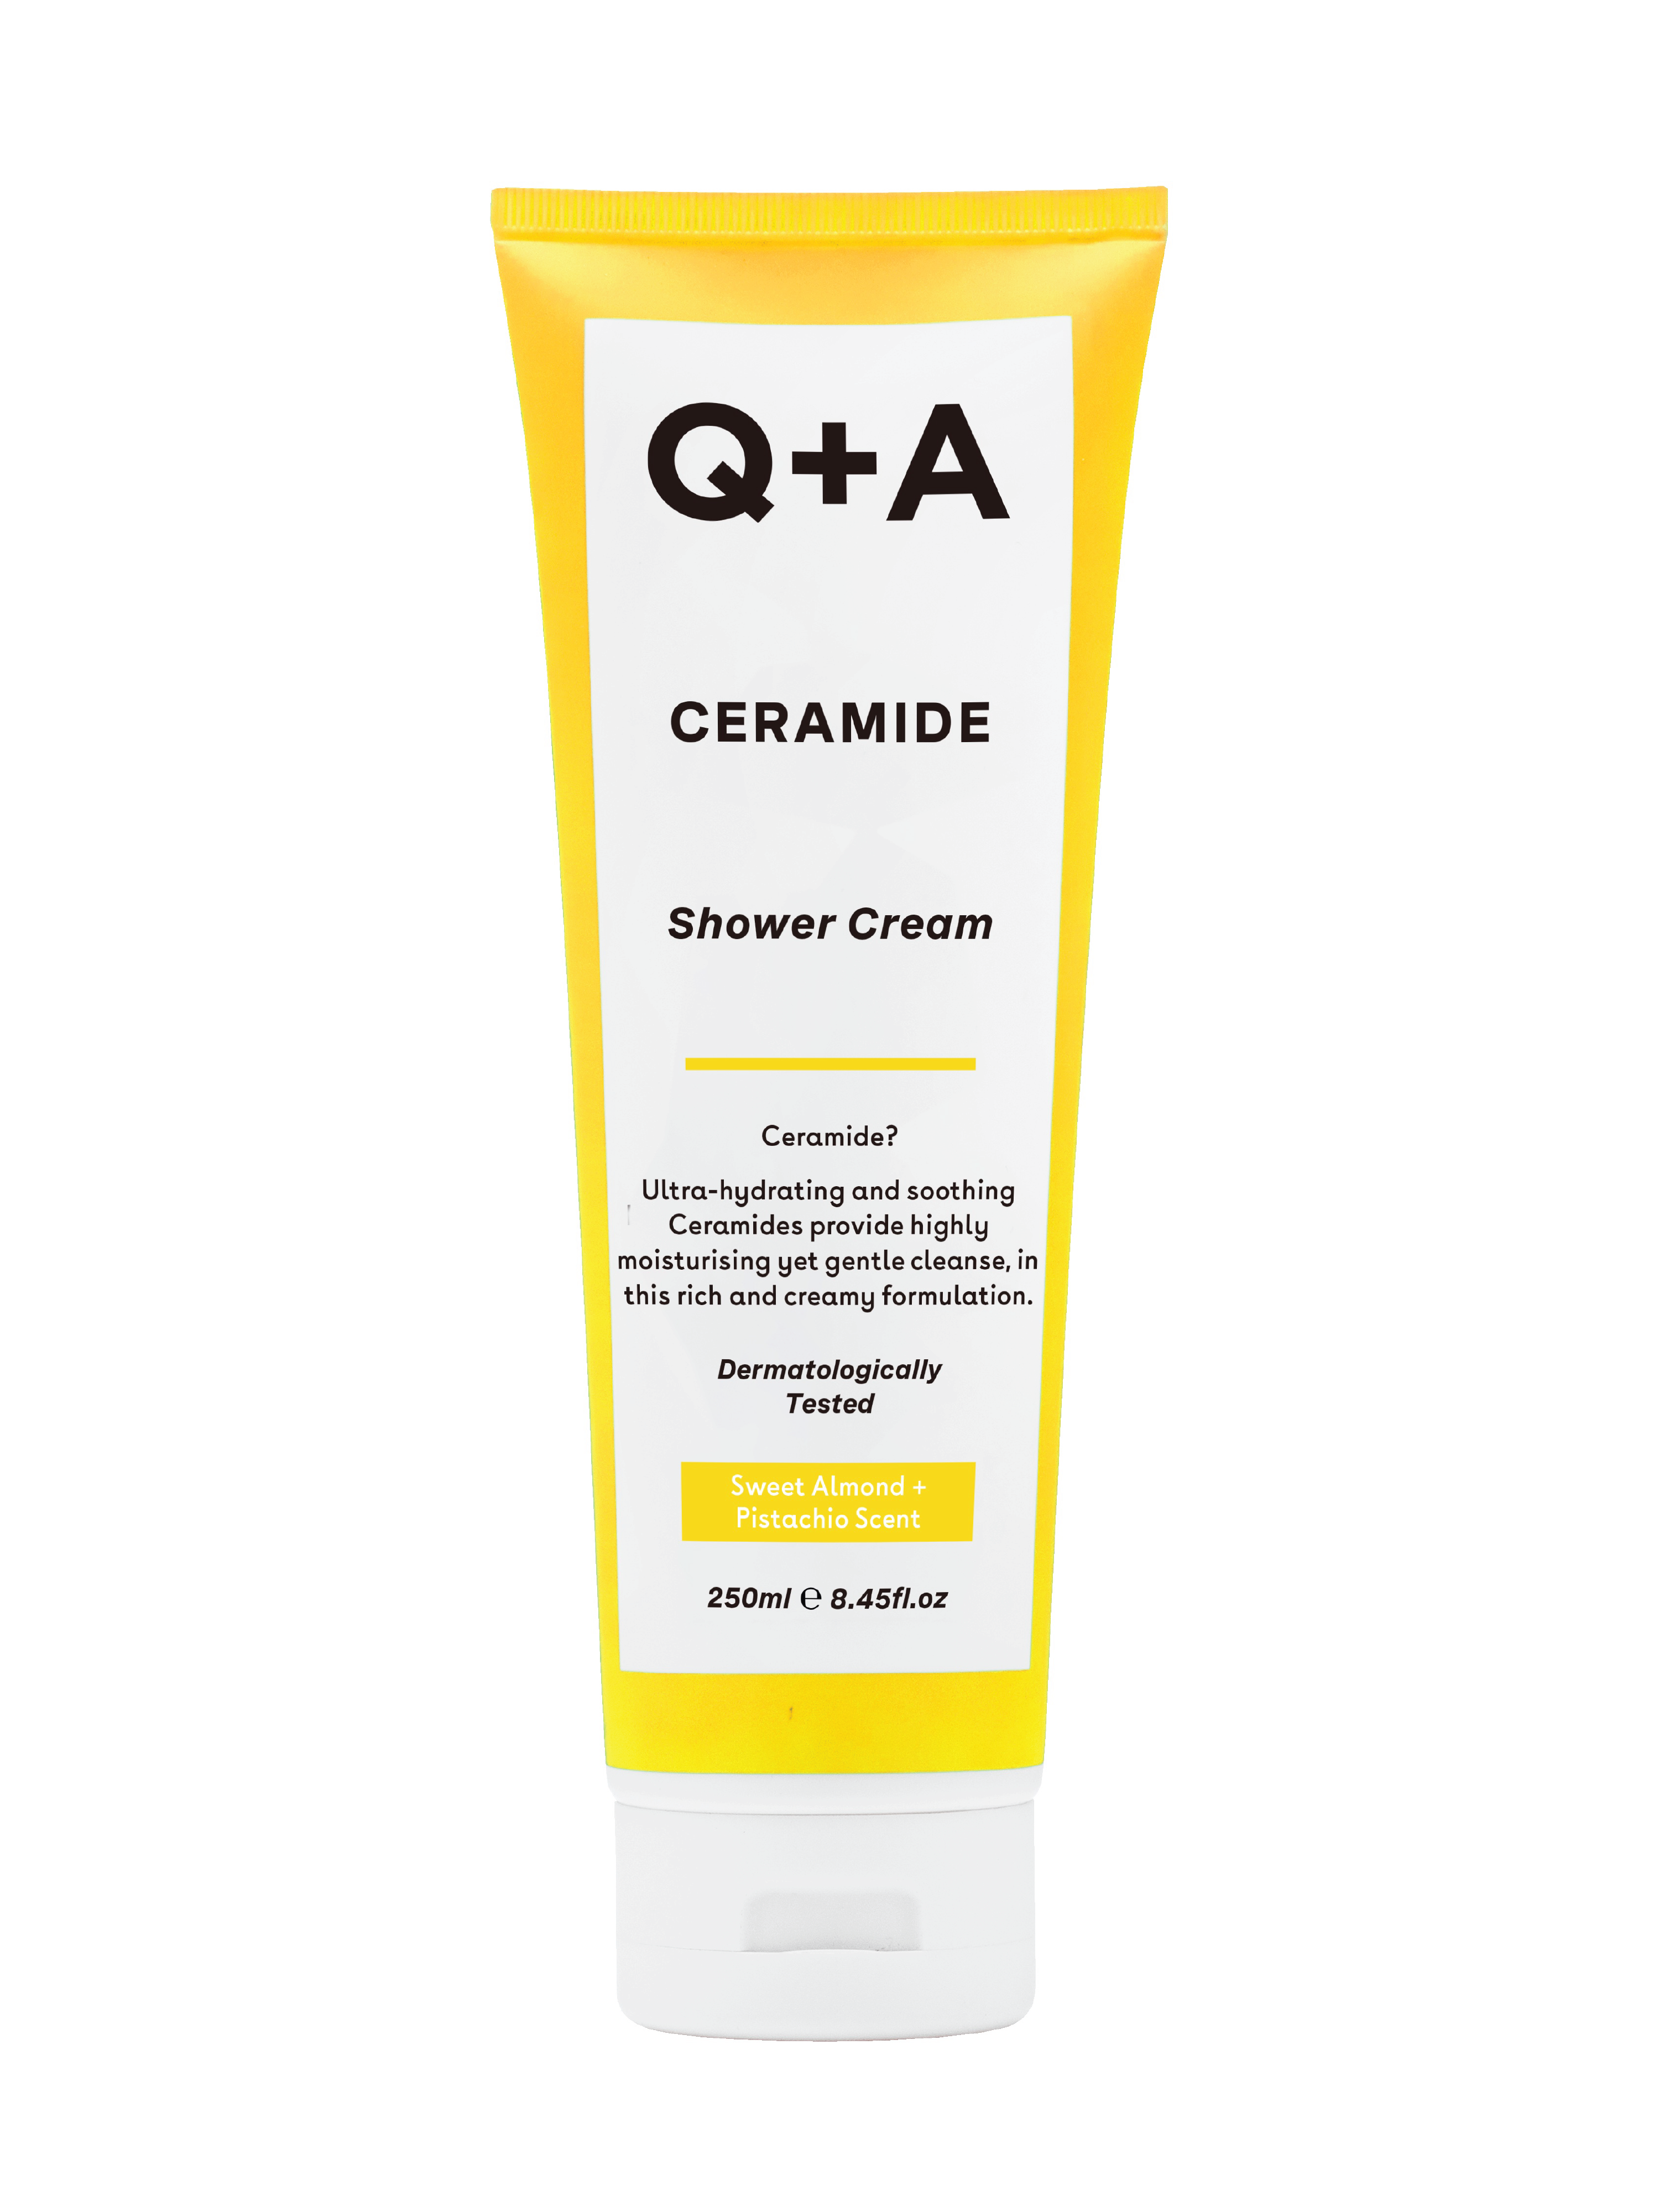 Q+A Ceramide Shower Cream, 250 ml